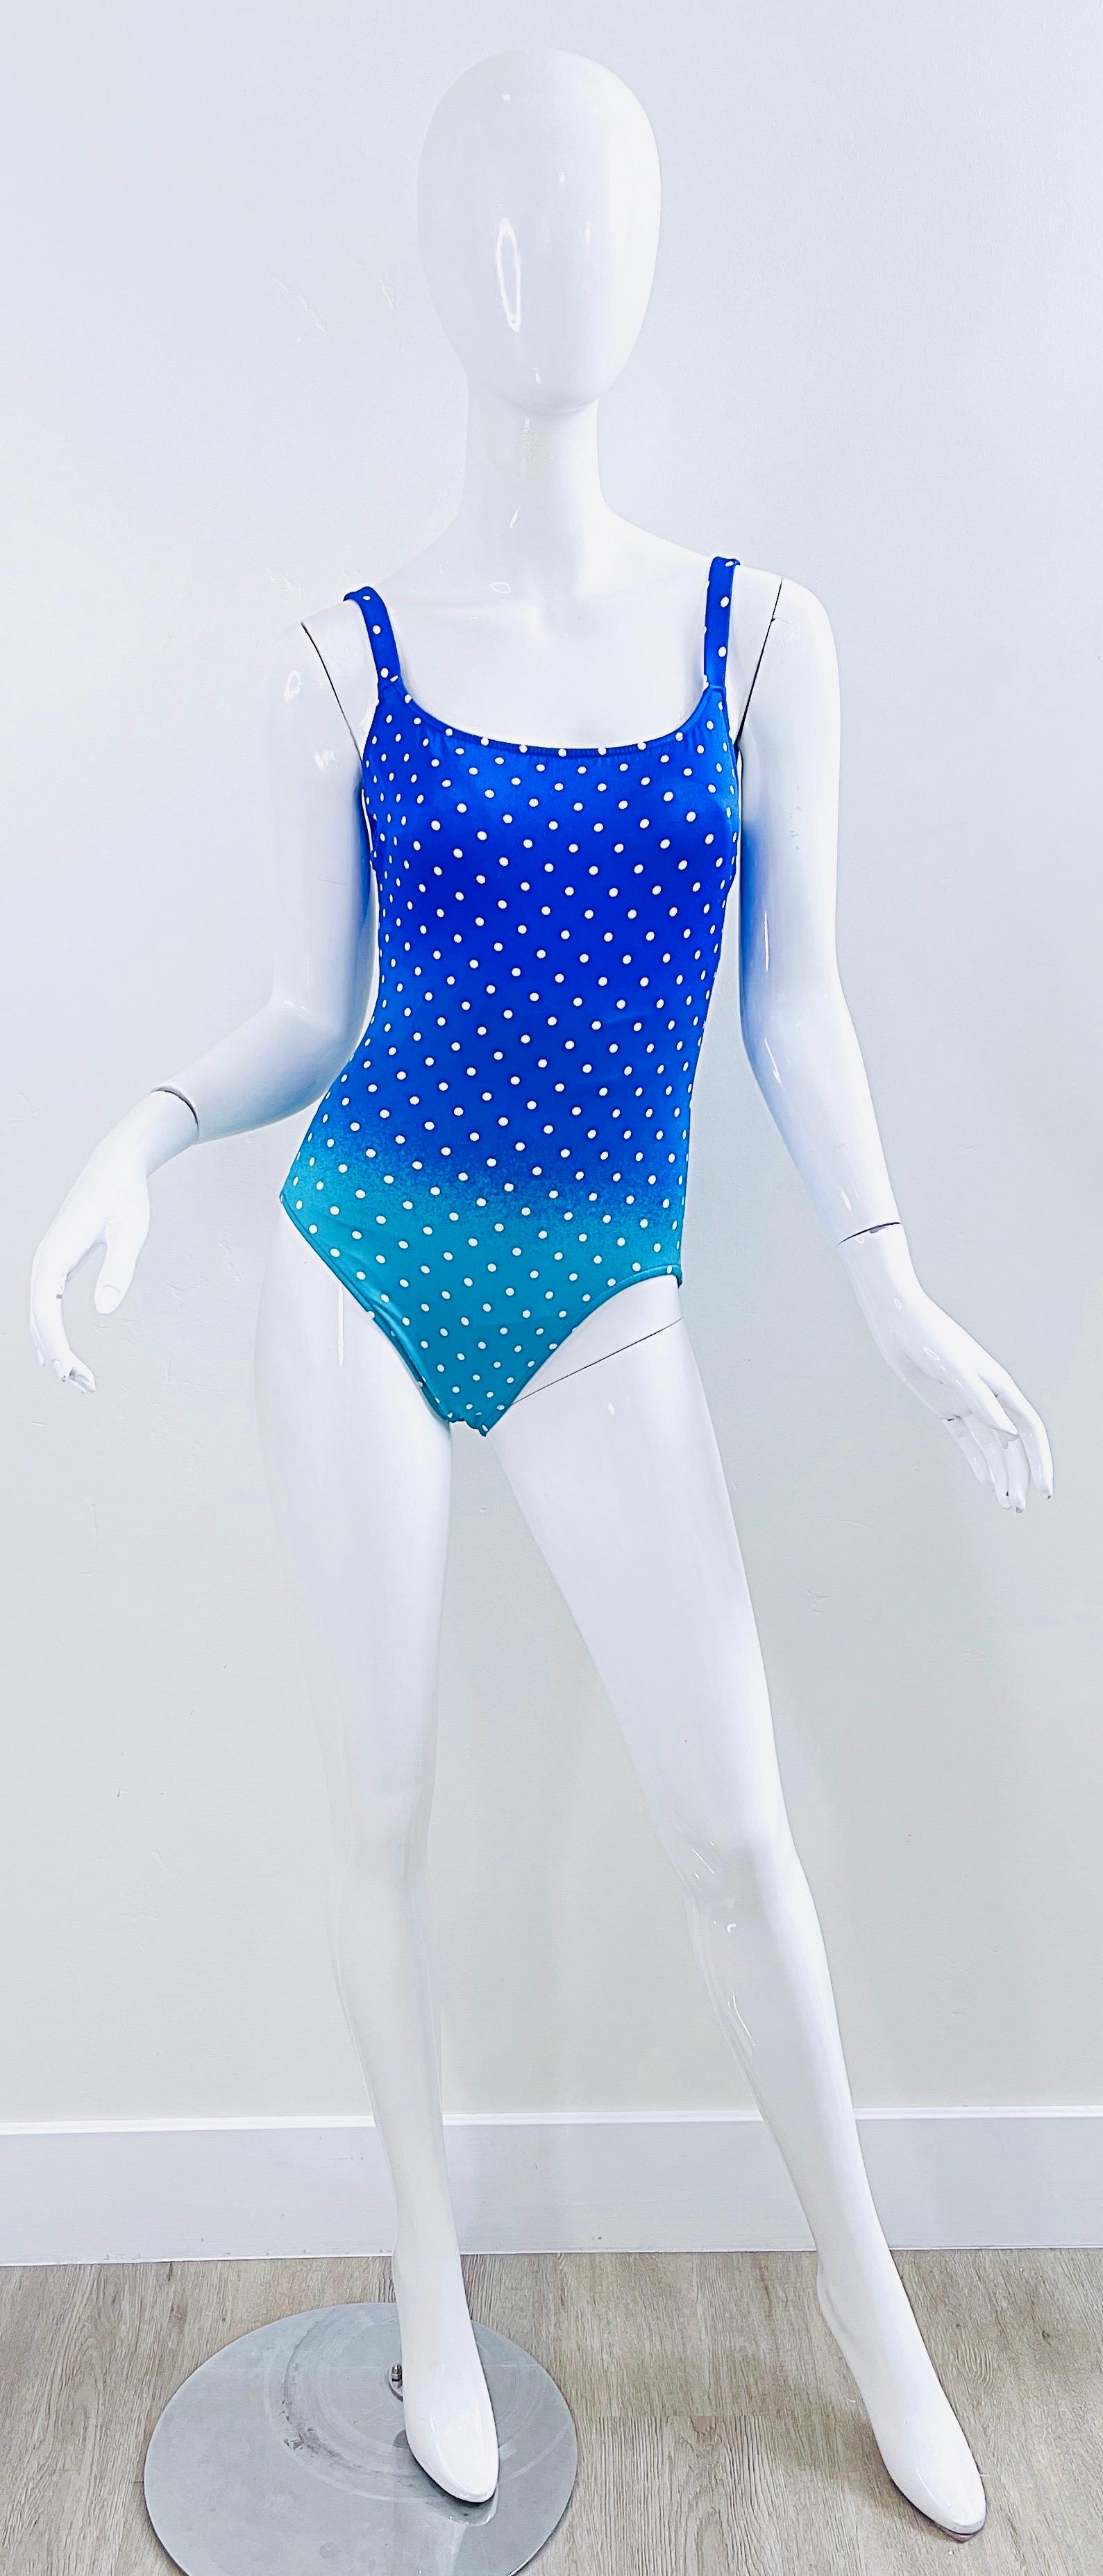 Bill Blass 1980s Blue Turquoise Size 6 Polka Dot One Piece 80s Swimsuit Bodysuit For Sale 9